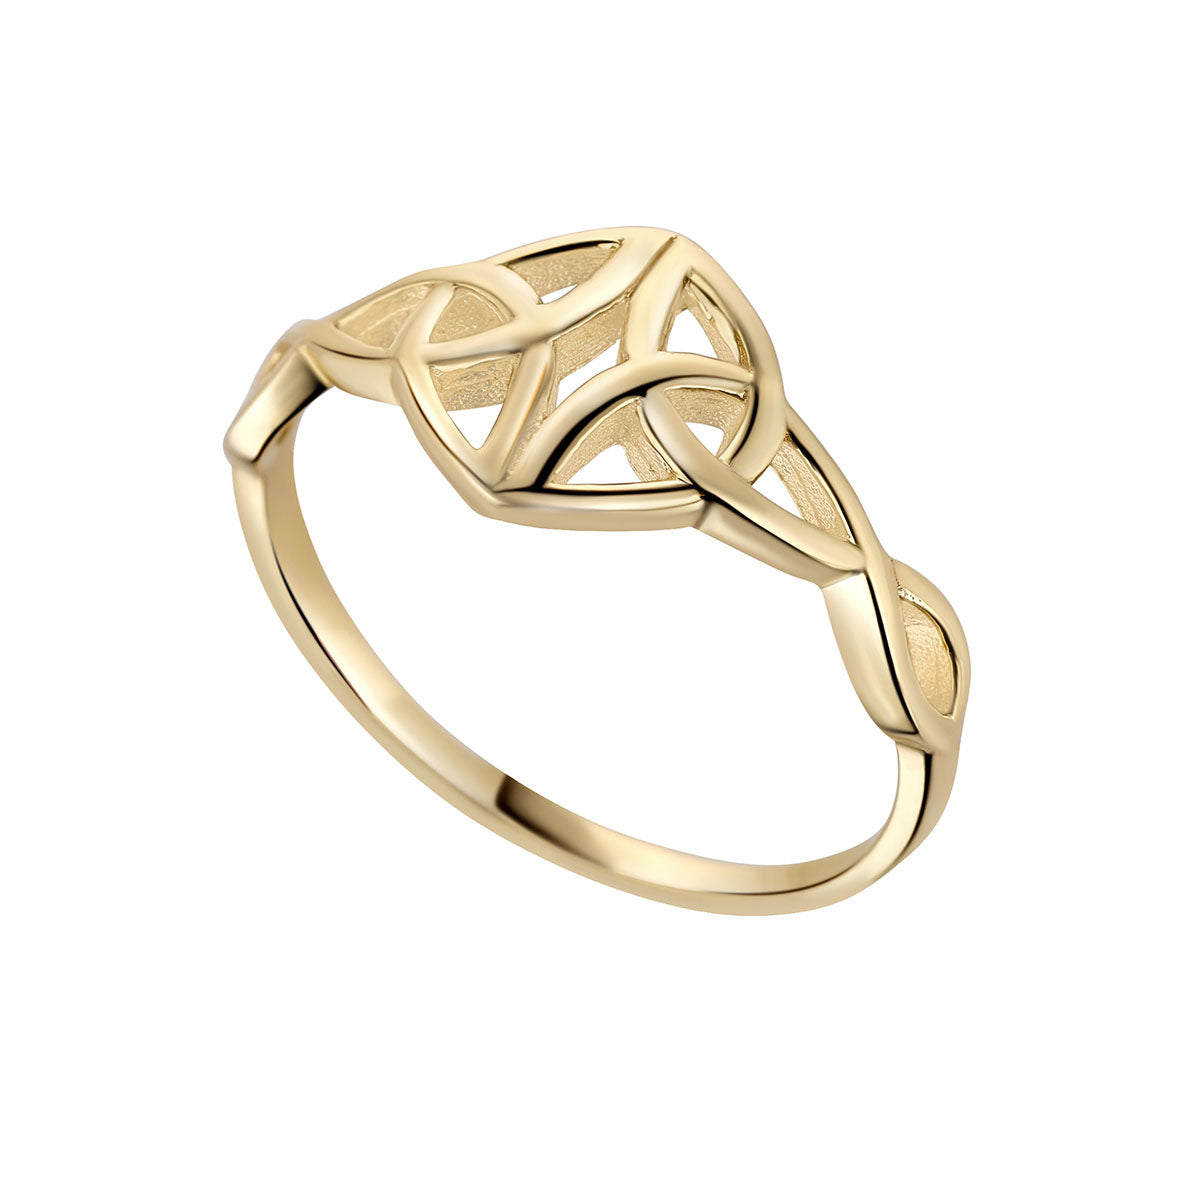 Stock image of Solvar 10k gold celtic trinity knot ring s21145